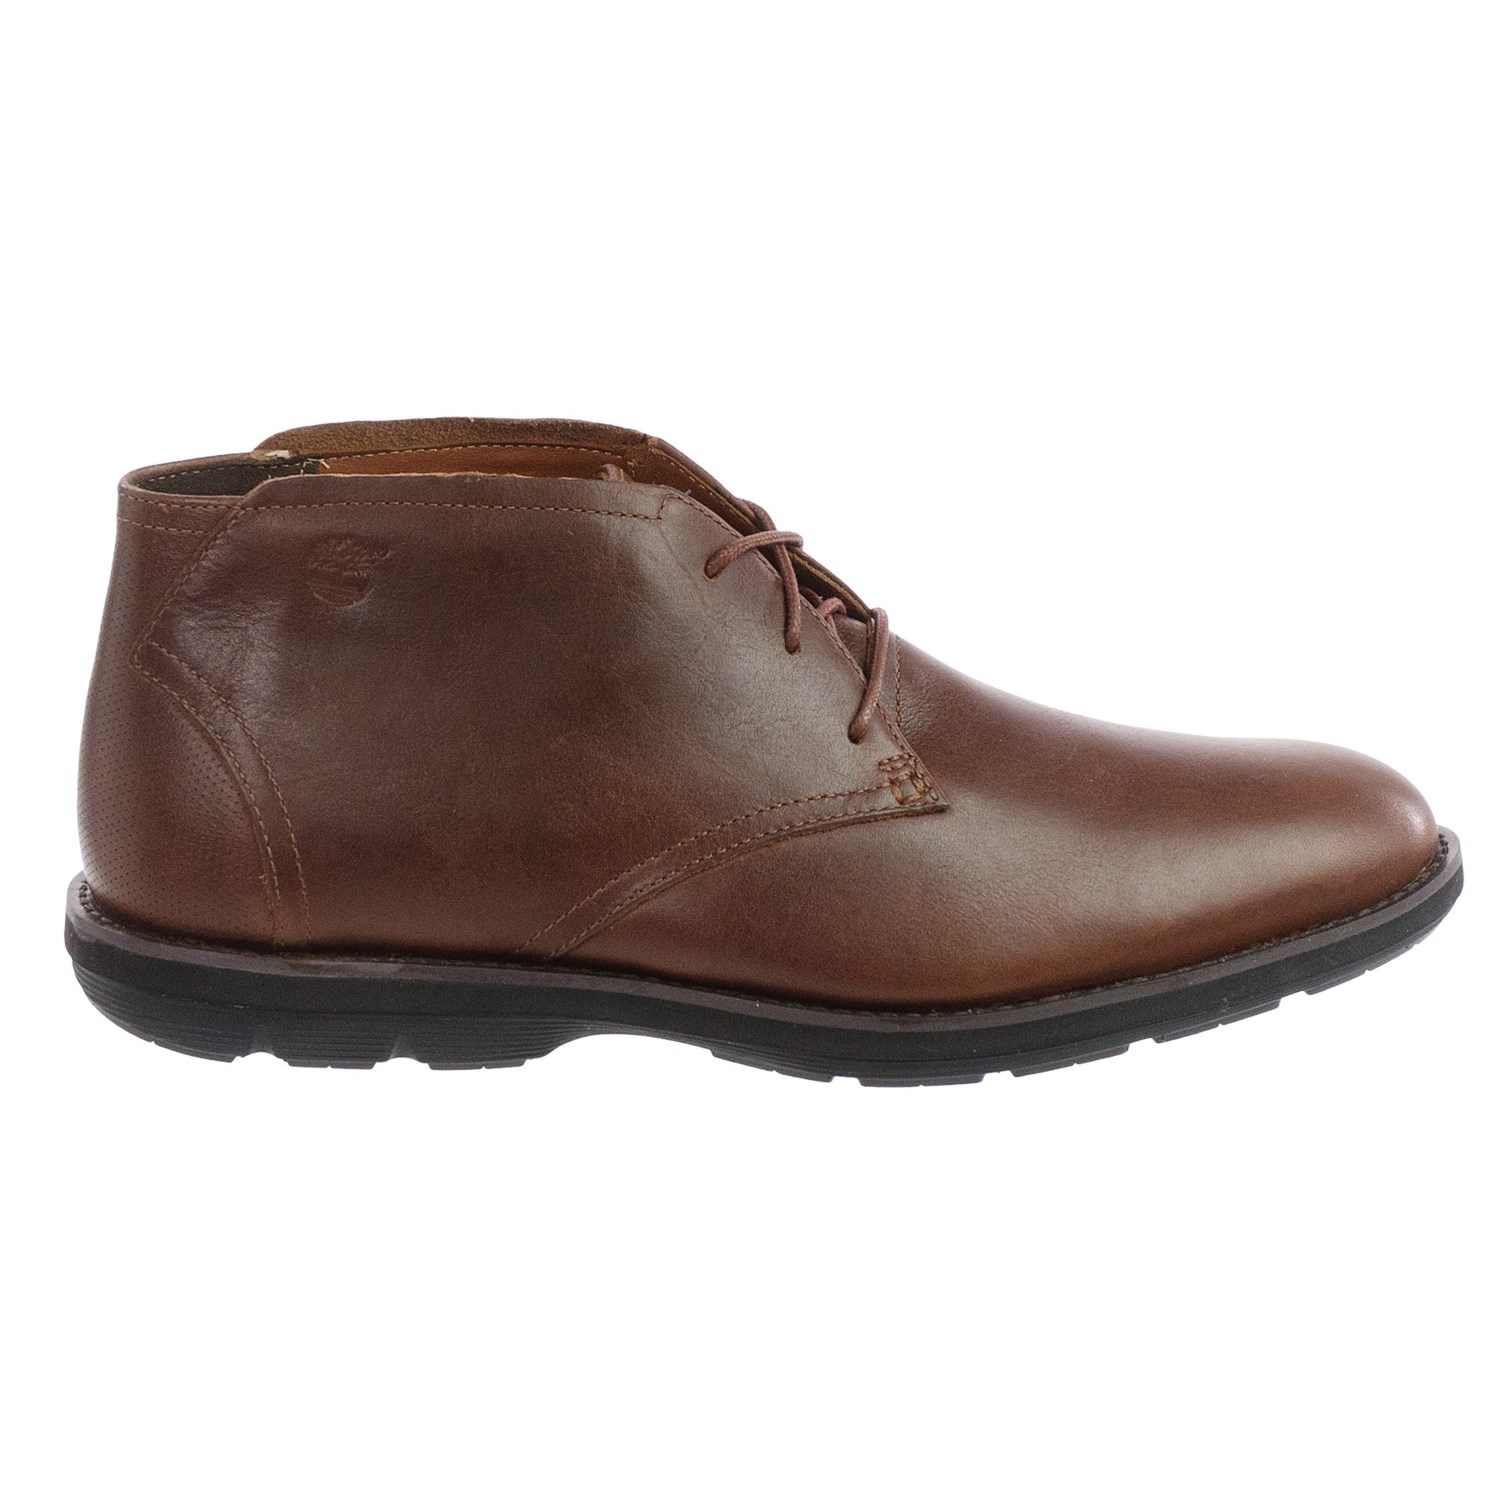 Timberland Kempton Leather Chukka Boots (For Men) - Save 42%